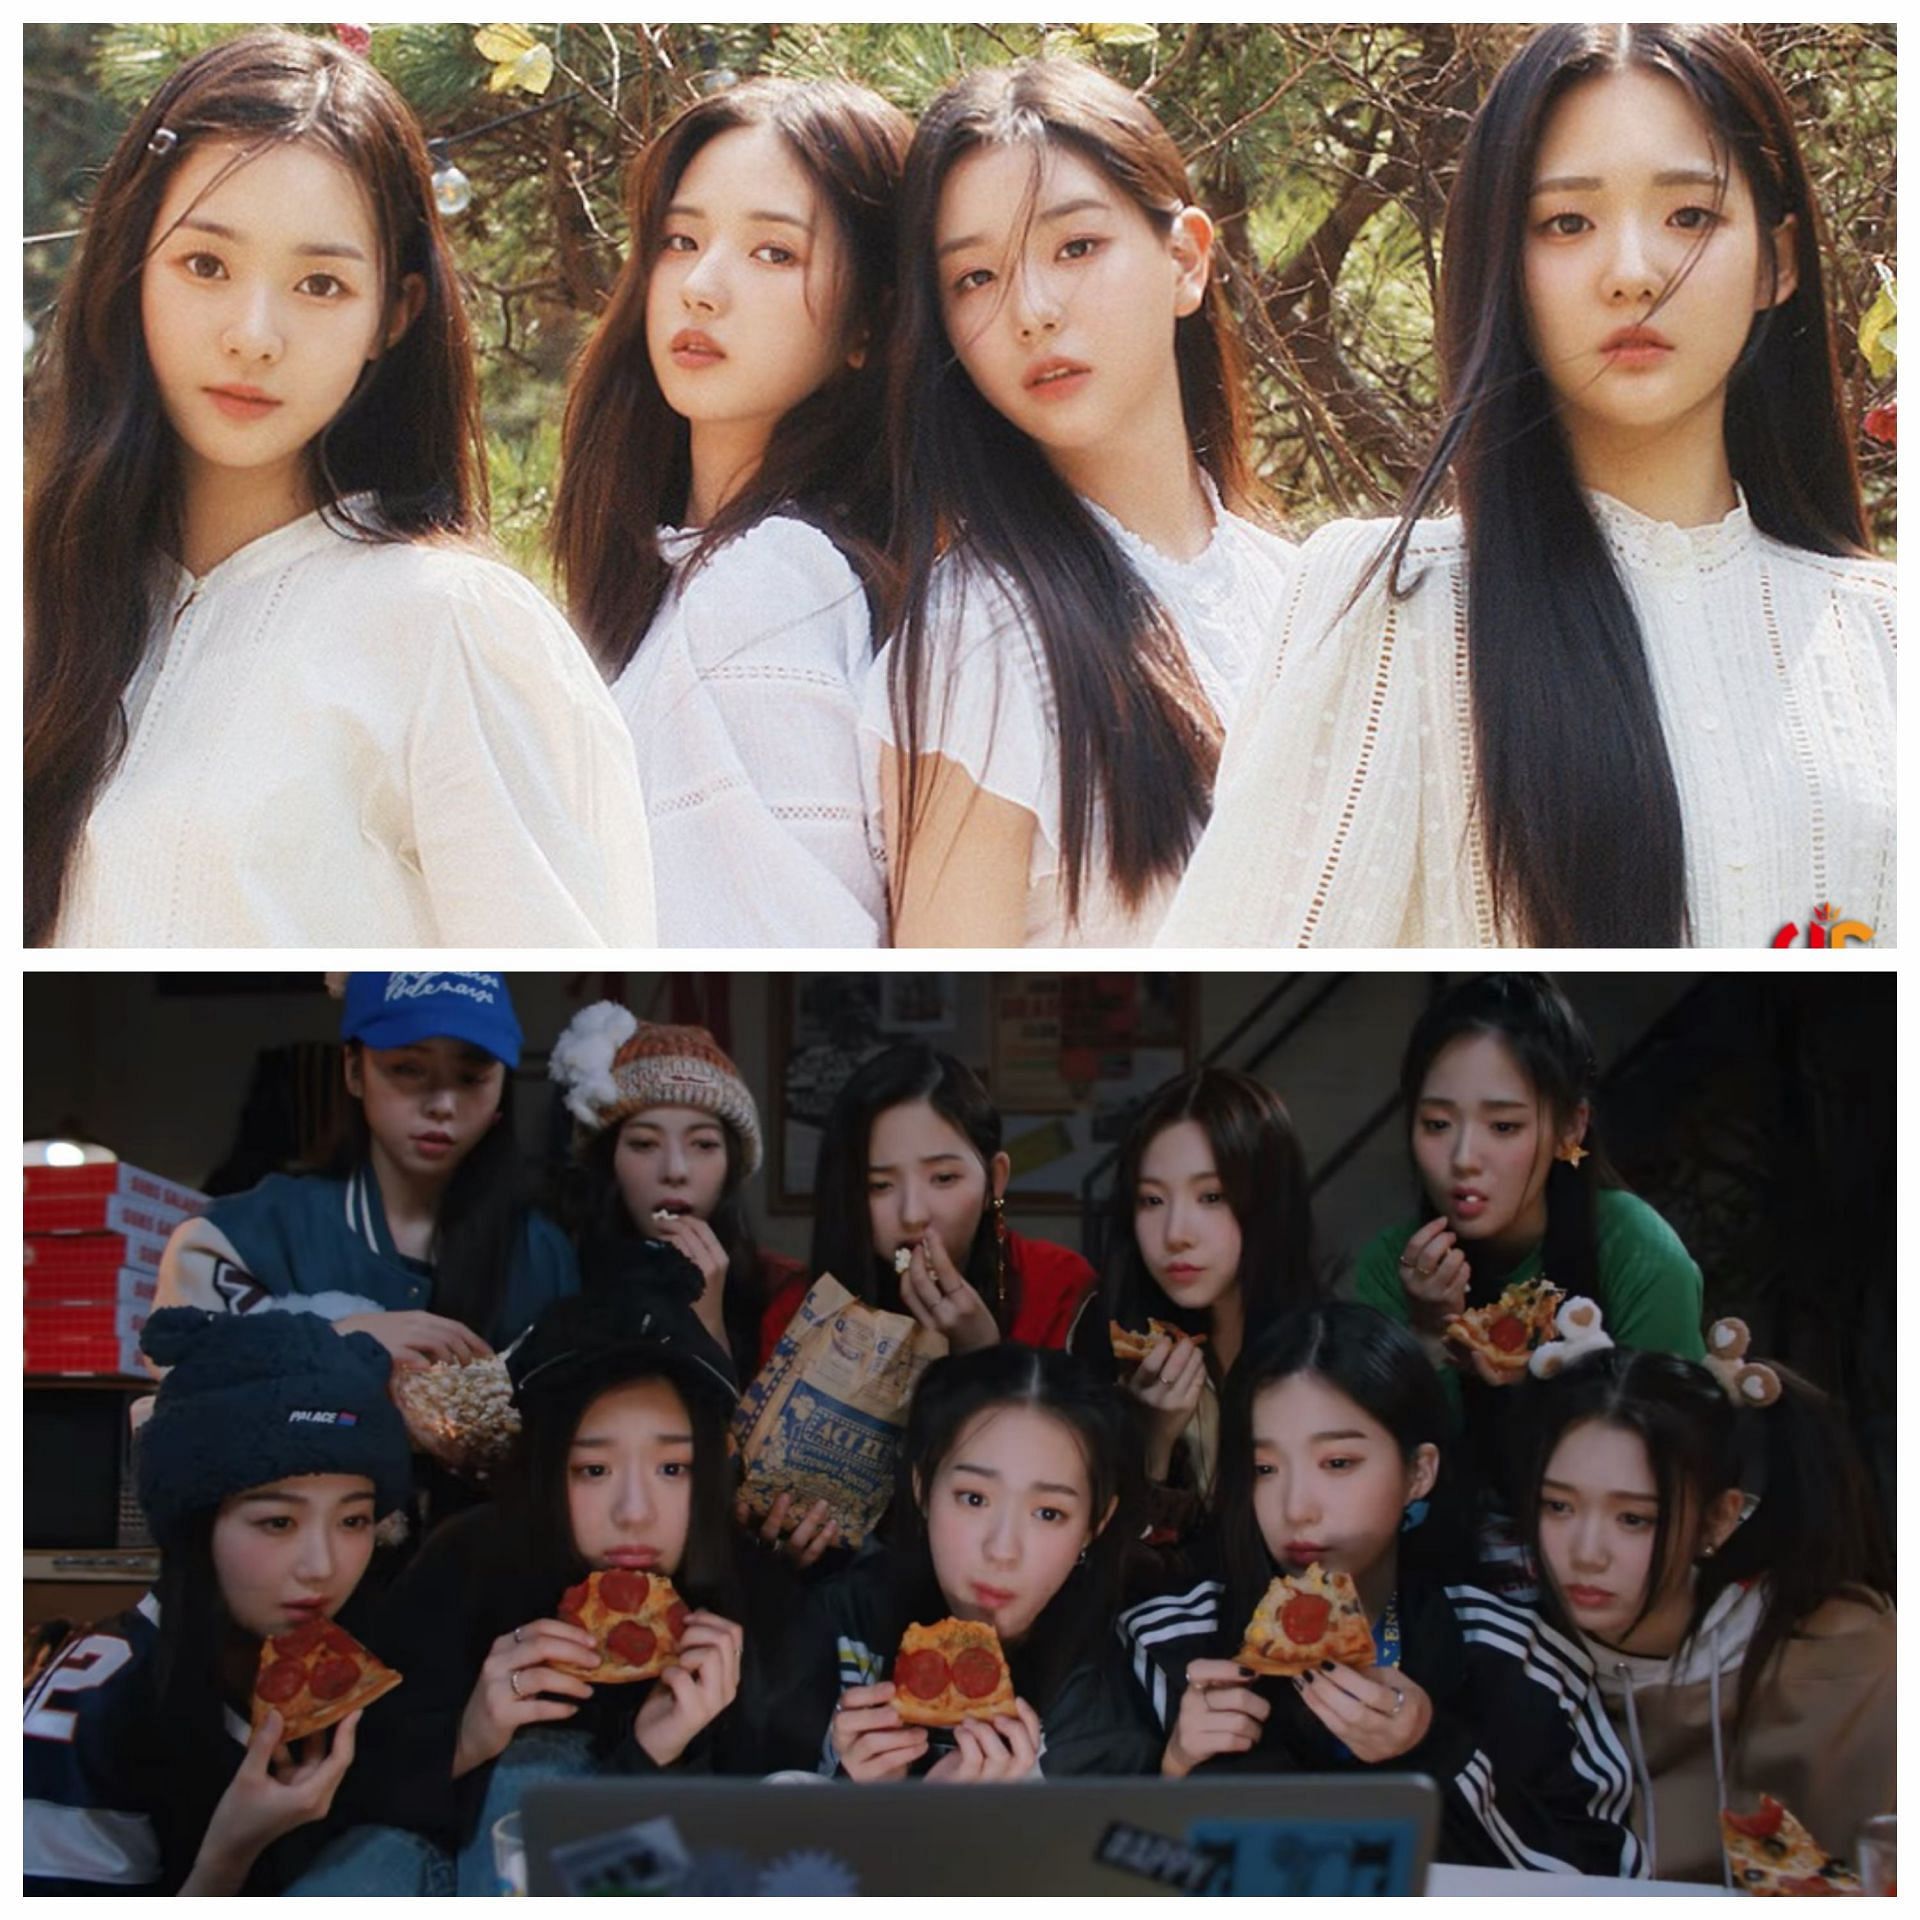 Two Portraits of K-pop group tripleS (Image via The Urban Spotlight)